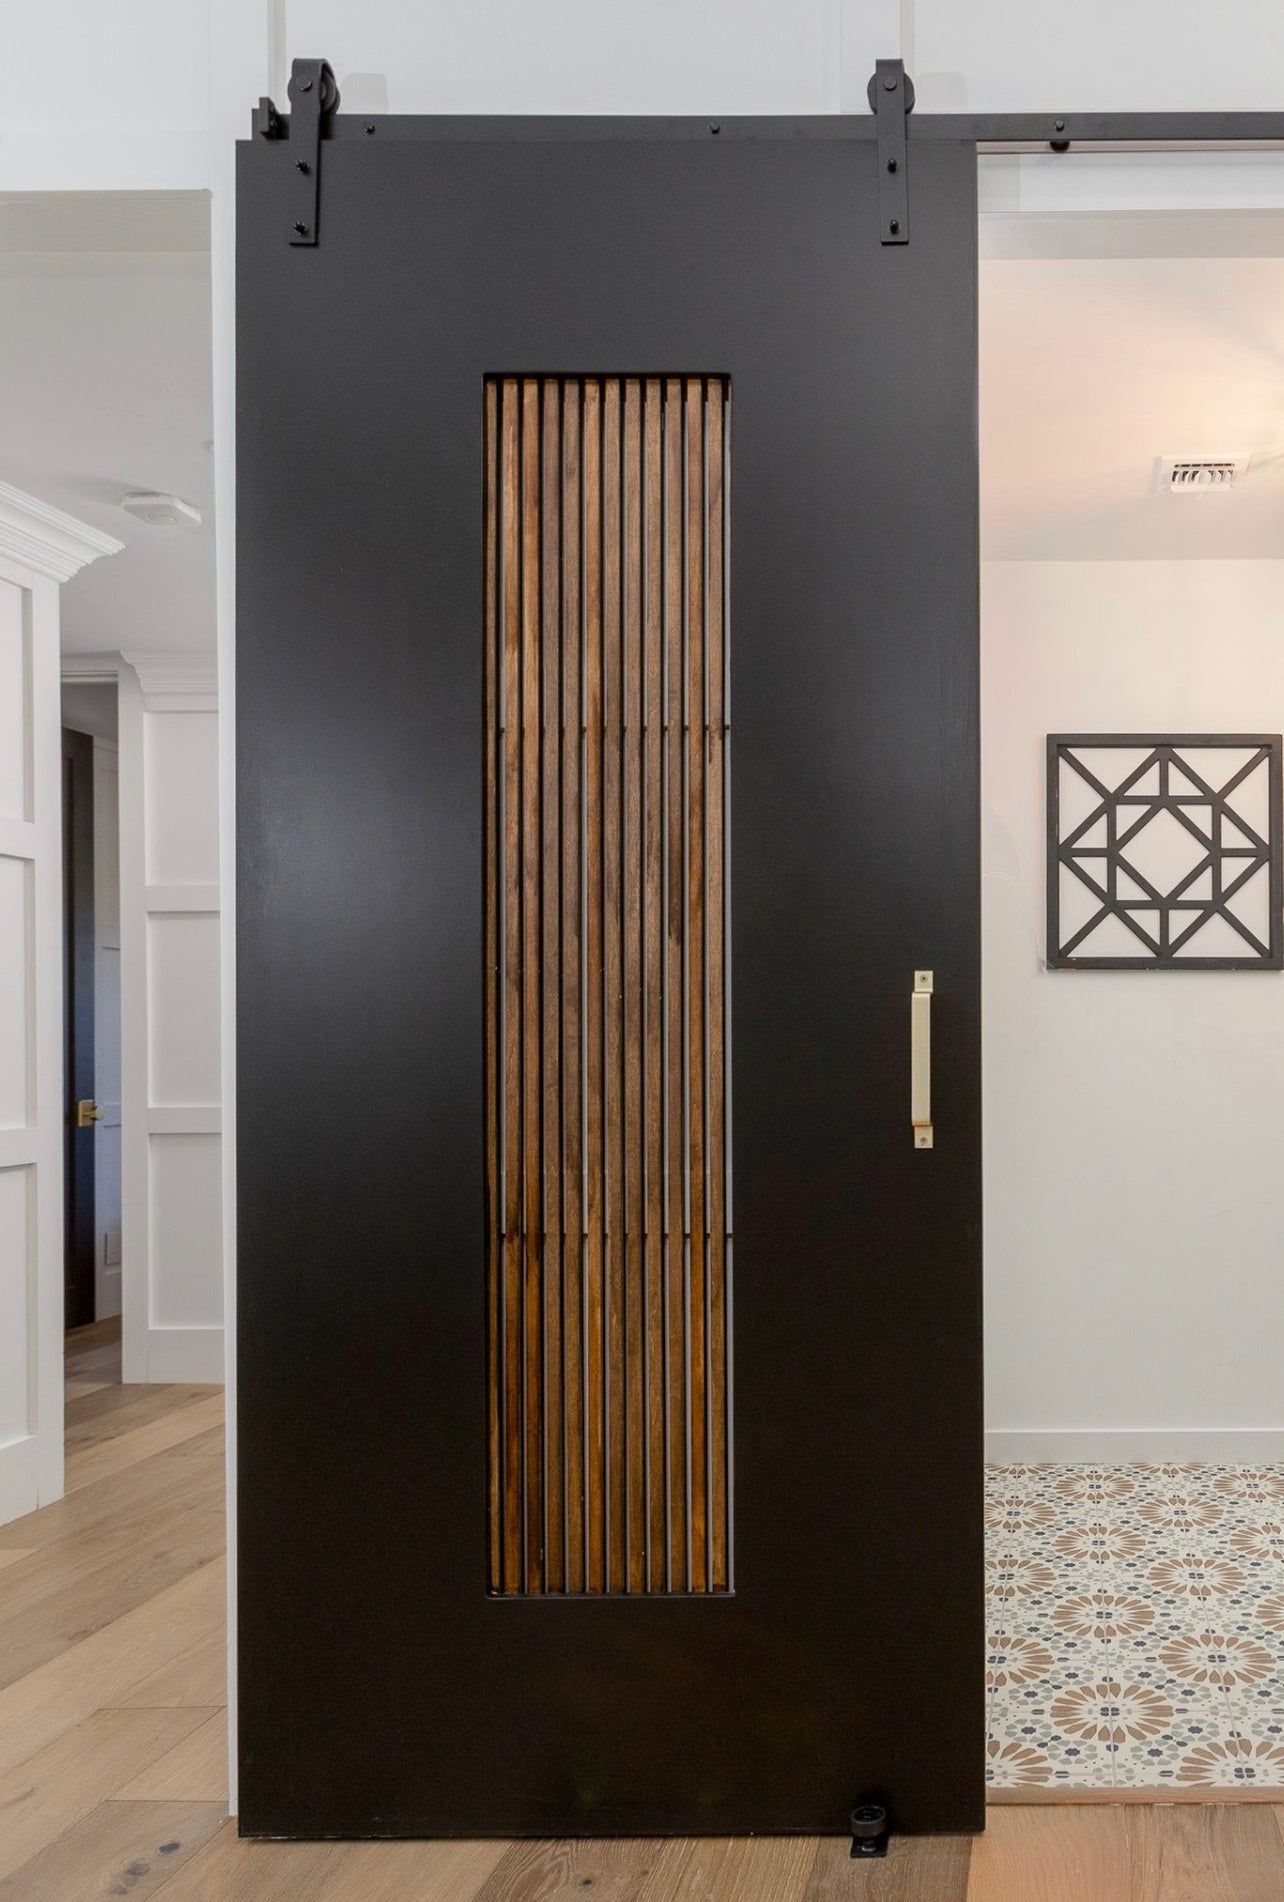 Door Frame Designs: Enhance Your Home’s Entryways with Stylish Door Frame Designs